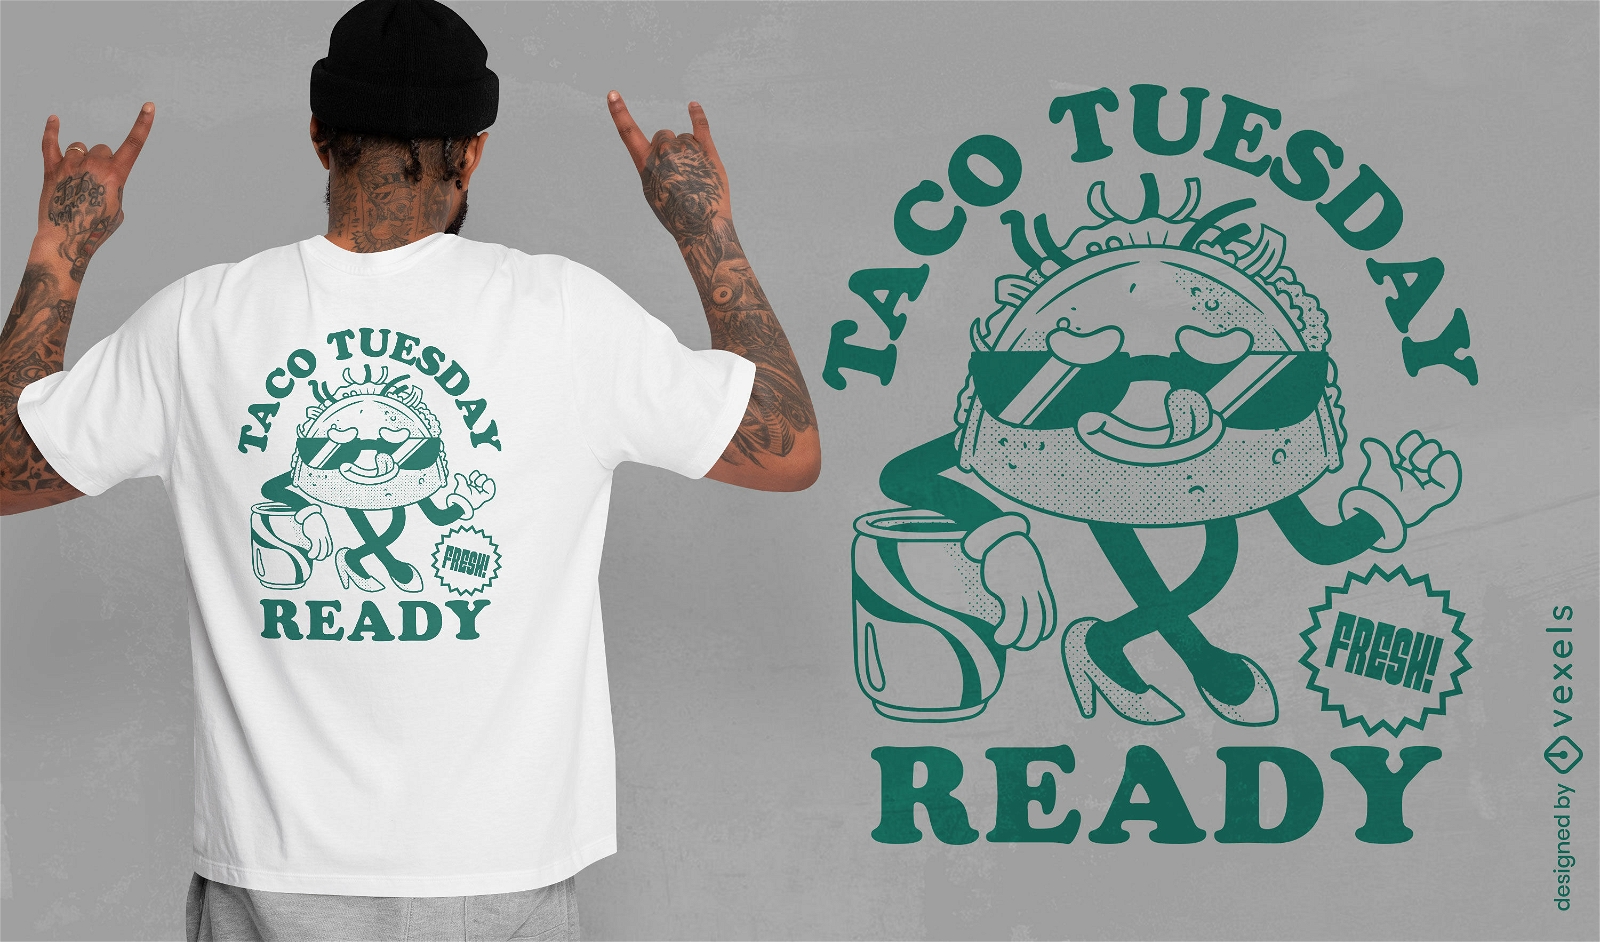 Taco tuesday ready food t-shirt design